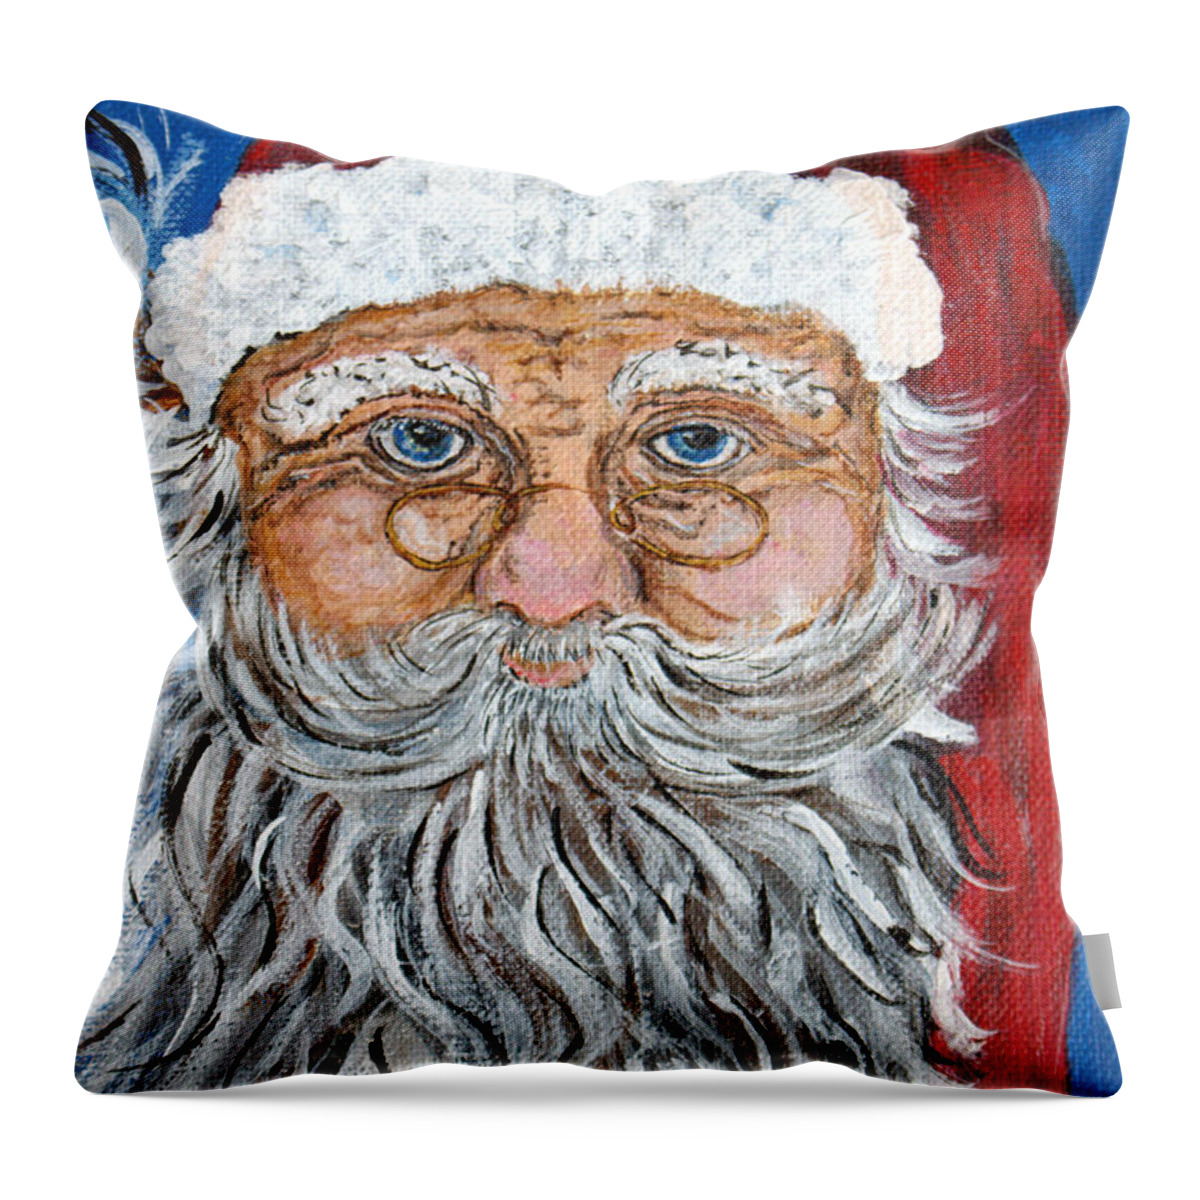 Christmas Throw Pillow featuring the painting Santa Claus - Christmas art by Ella Kaye Dickey